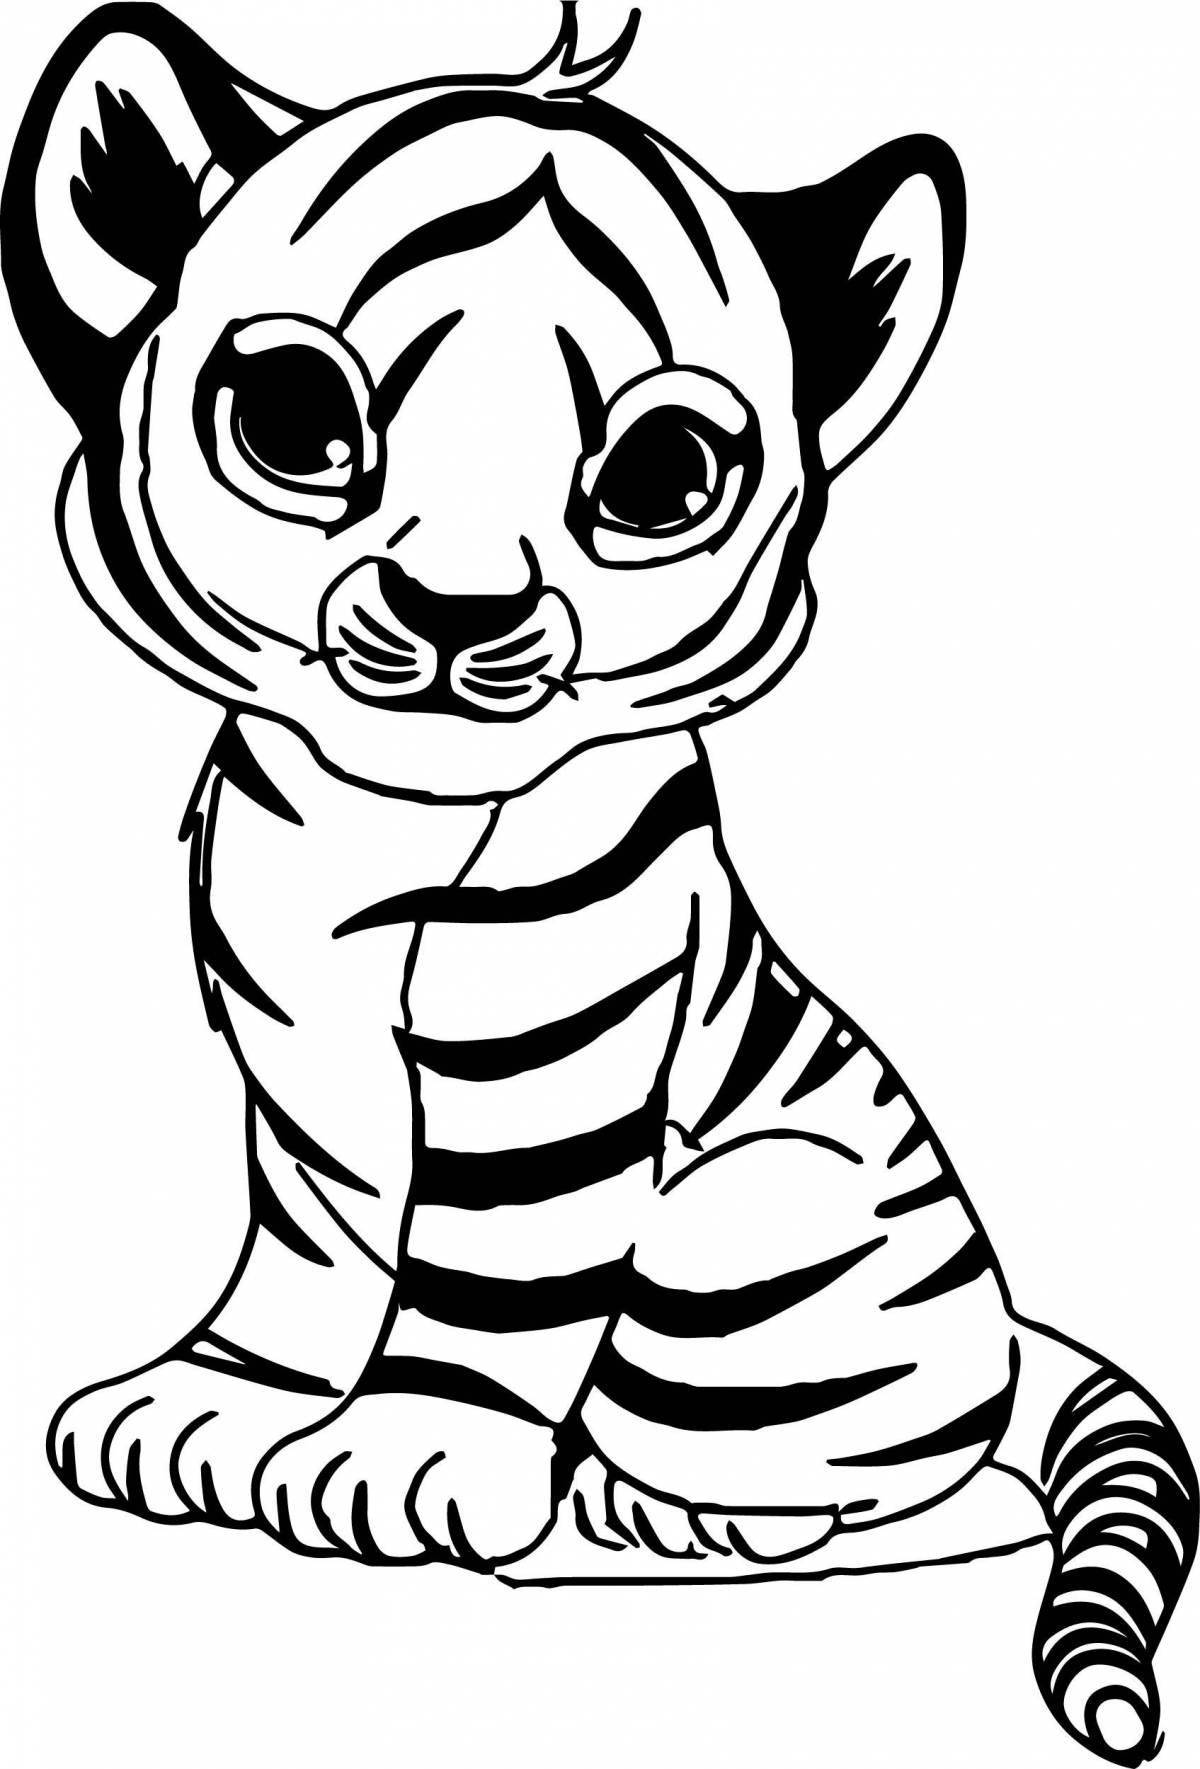 Charming tiger cub coloring